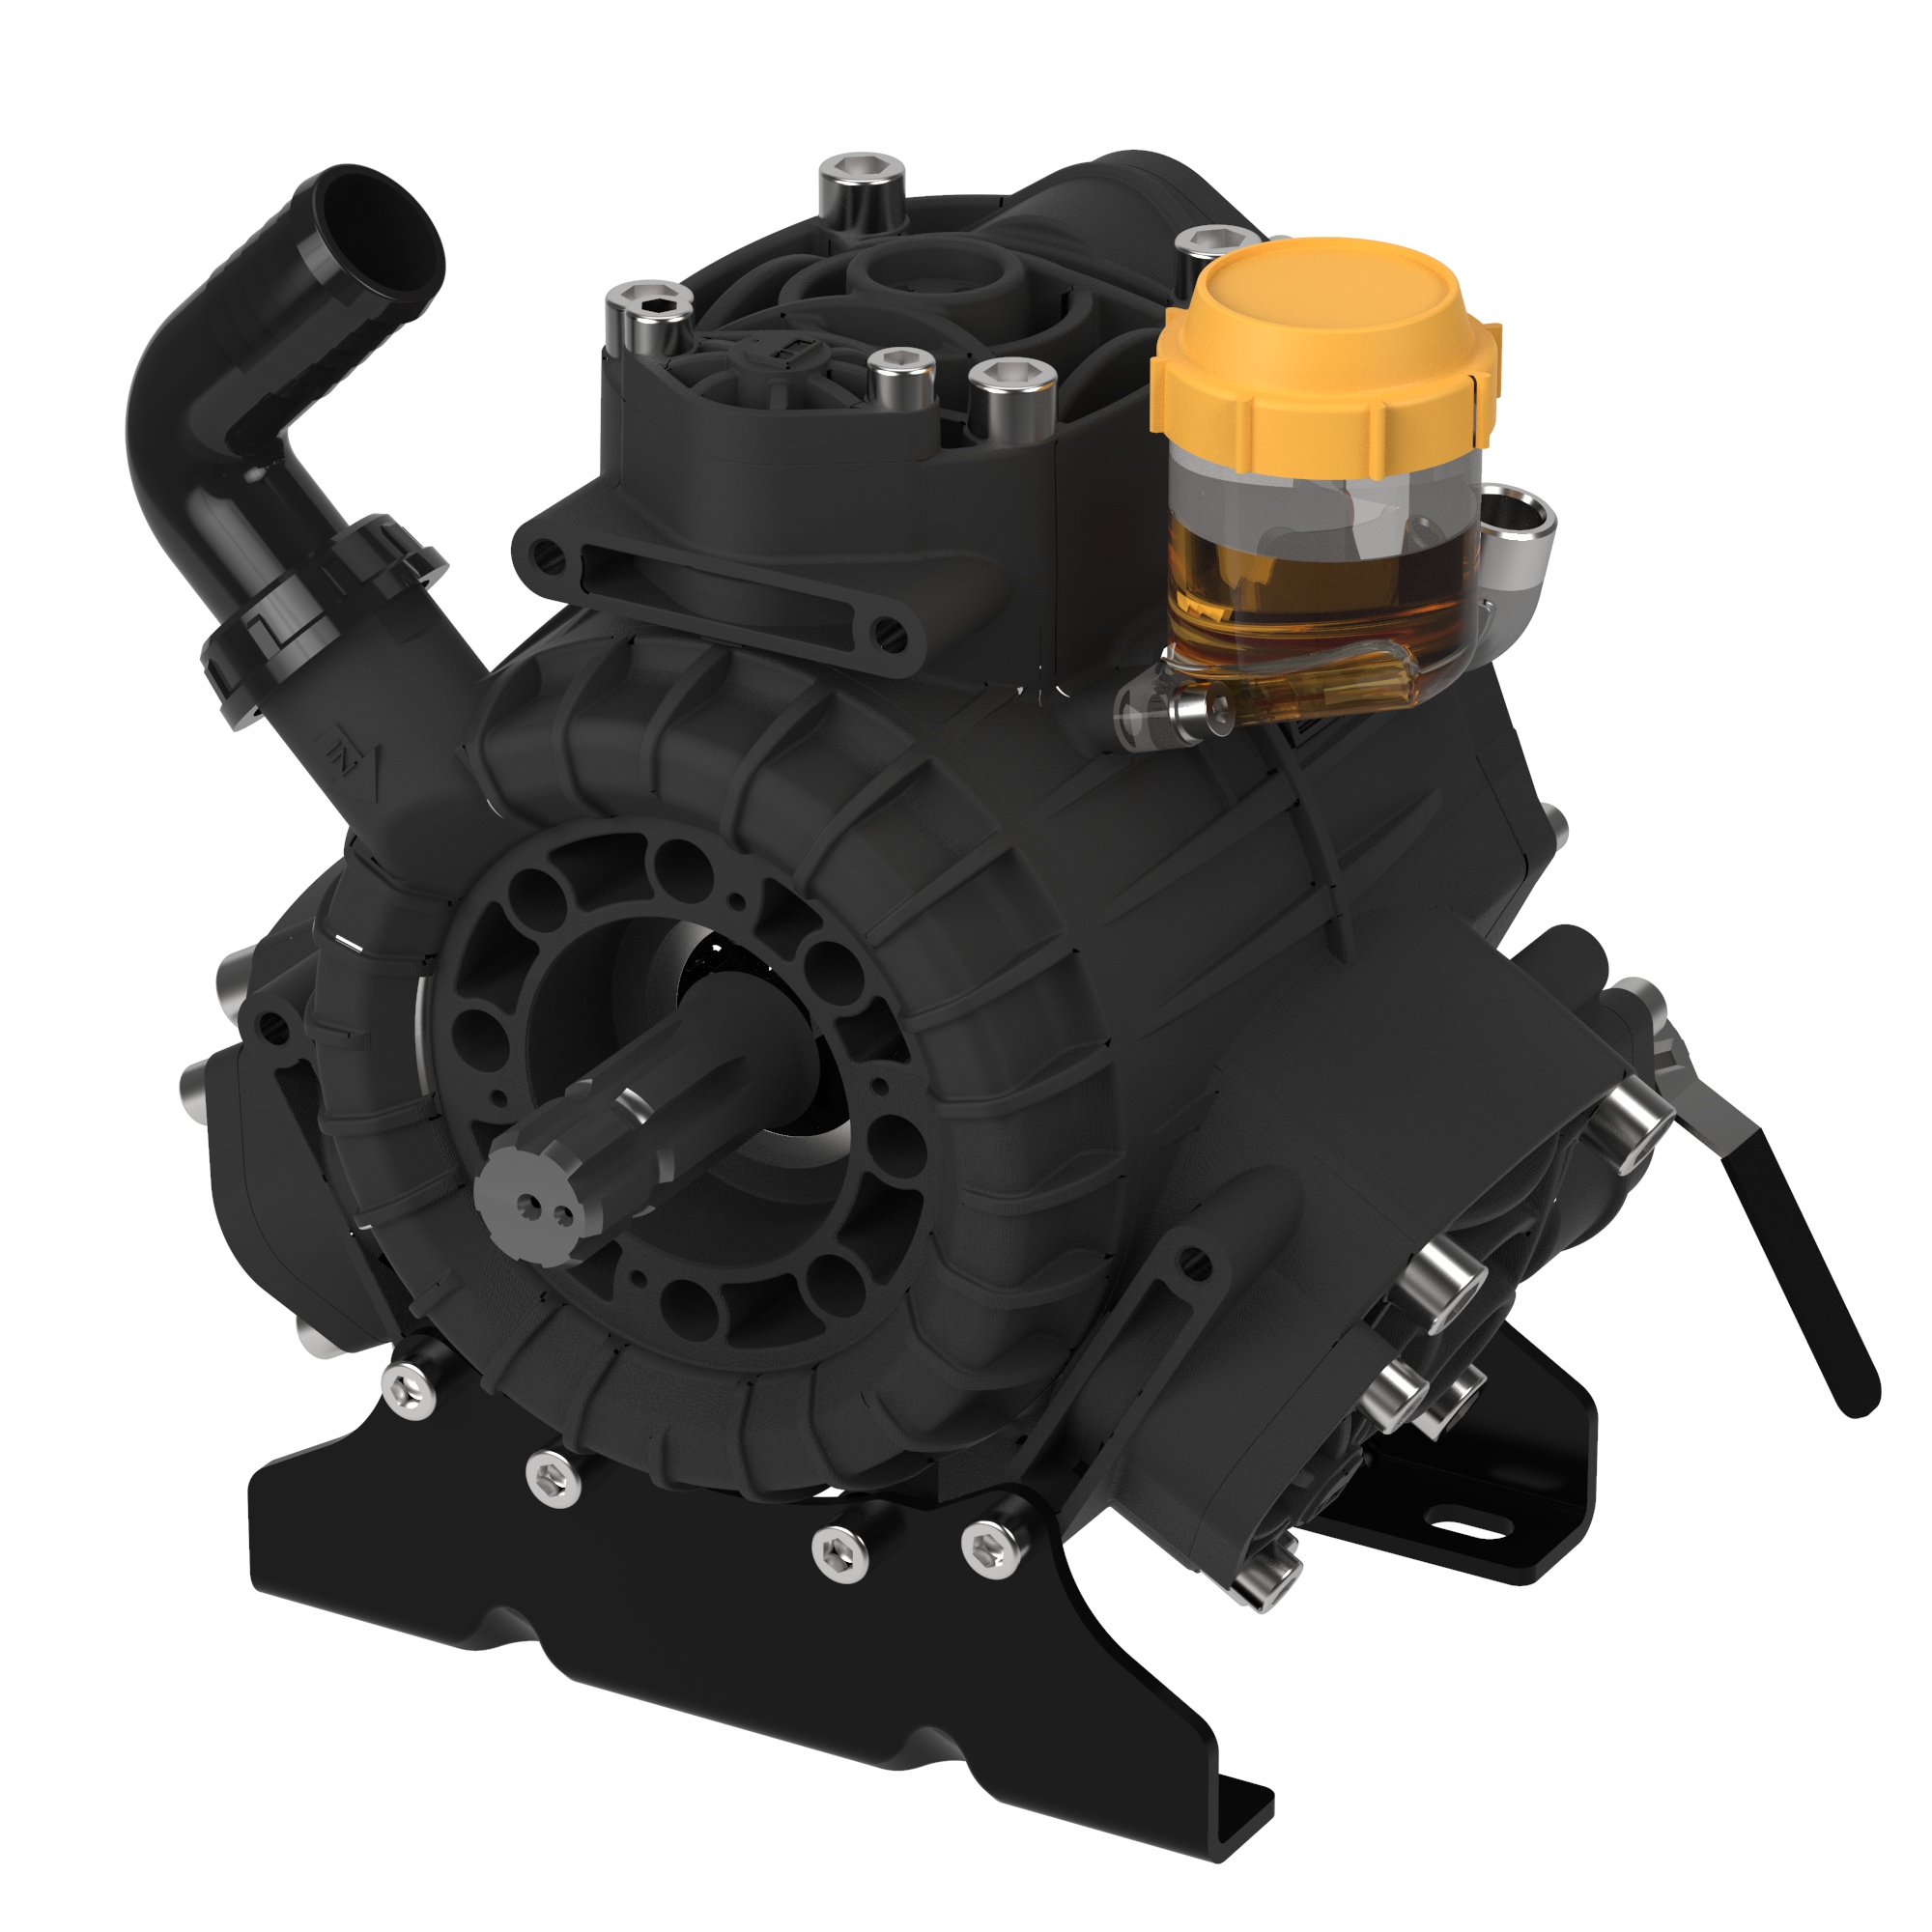 Pentair Hypro 9915系列高压隔膜泵”>
                <div class=